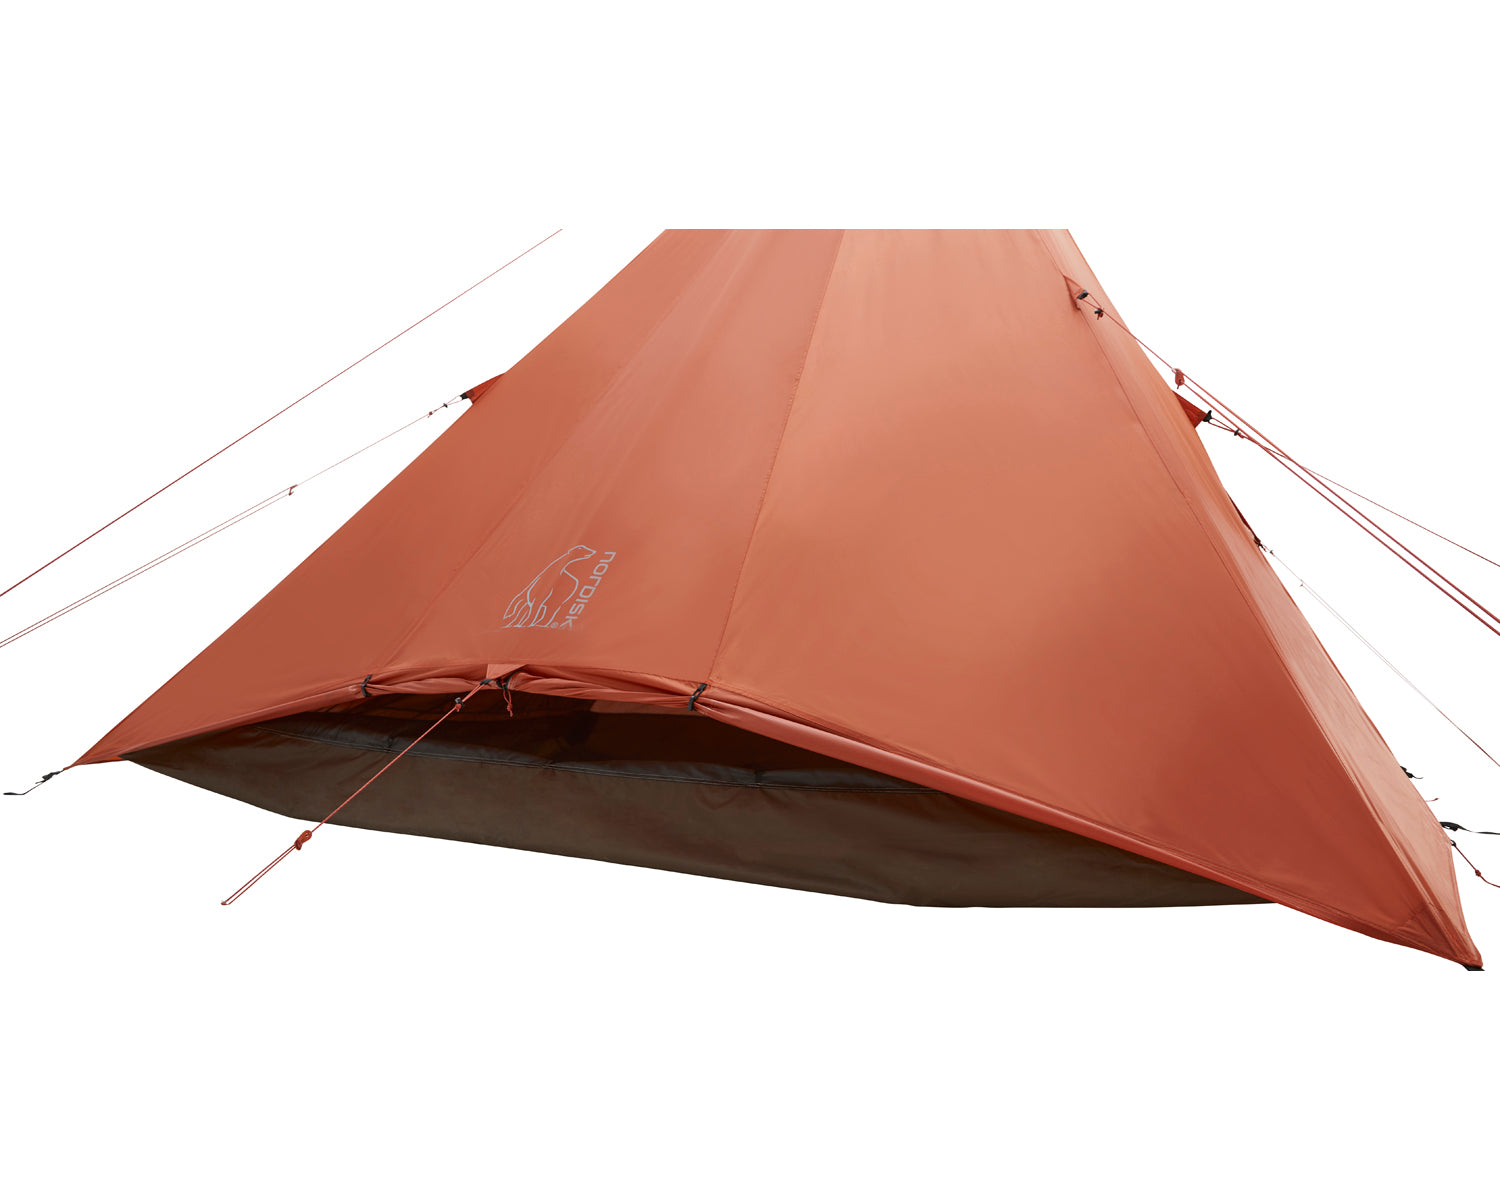 Thrymheim 3 PU tent - 3 person - Picante/Cashew